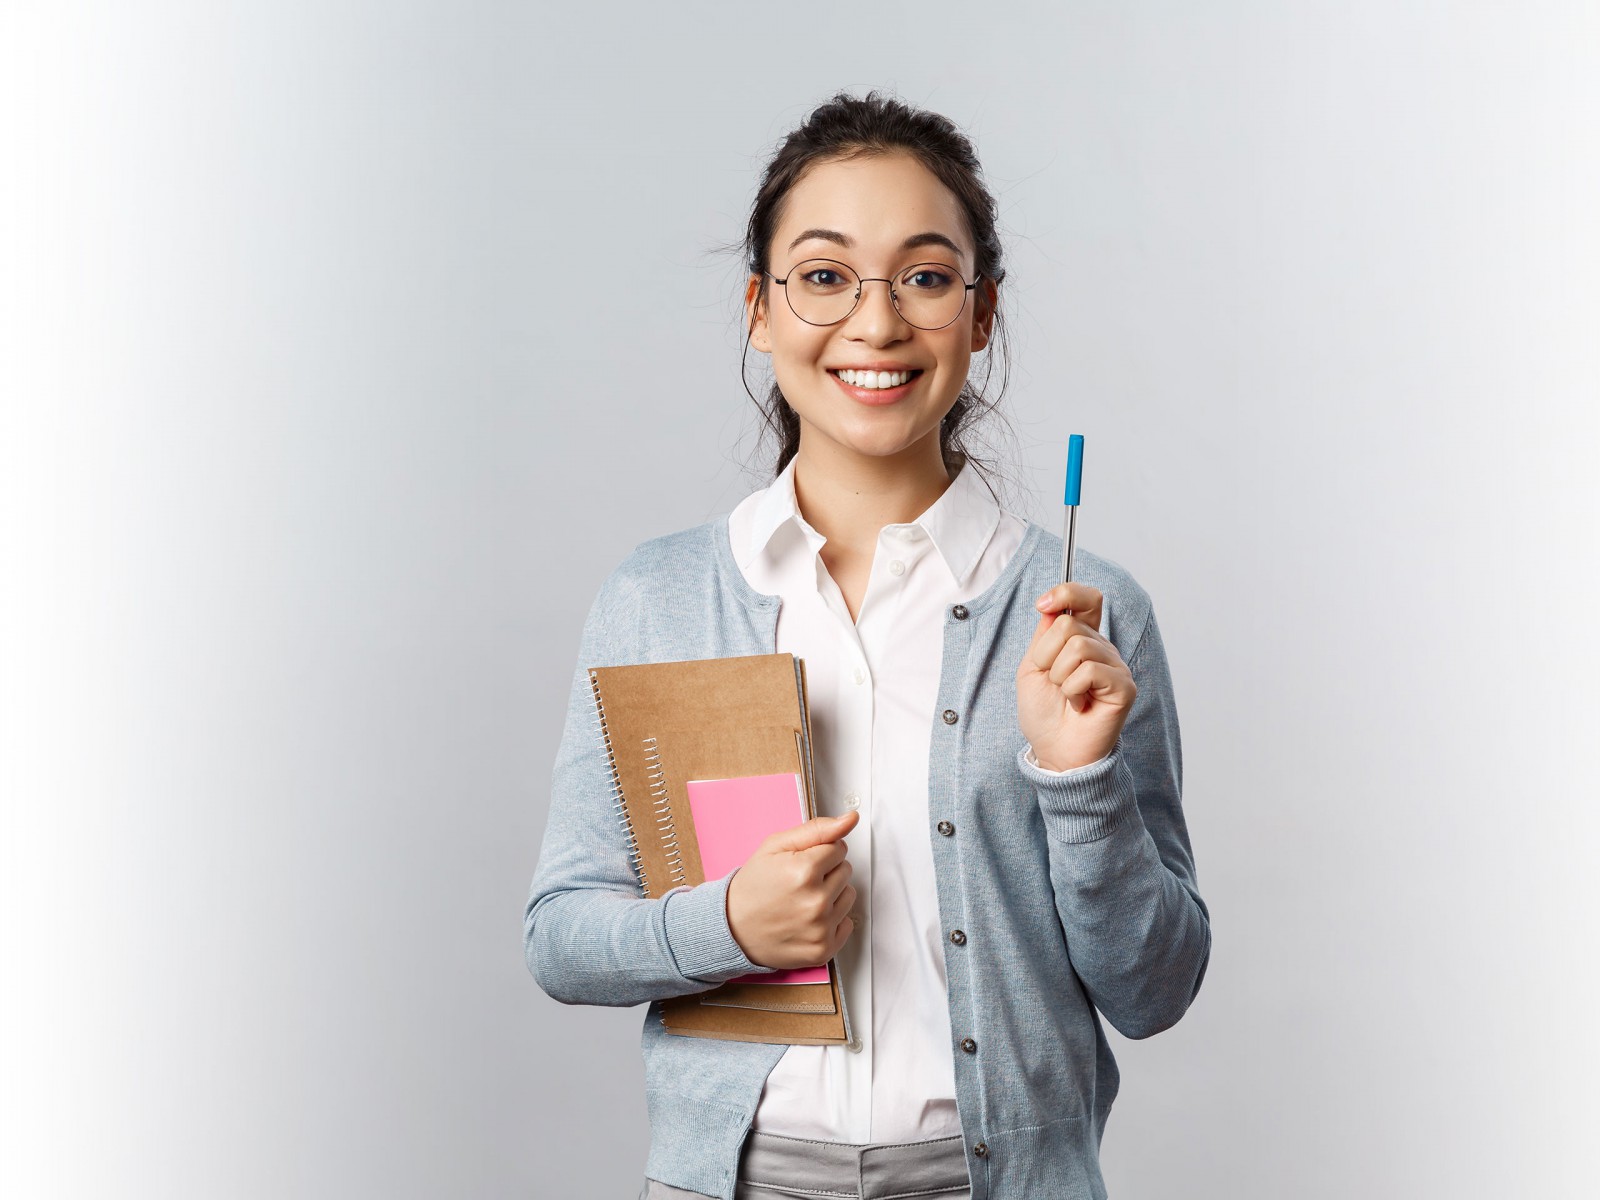 Student smiling holding pen